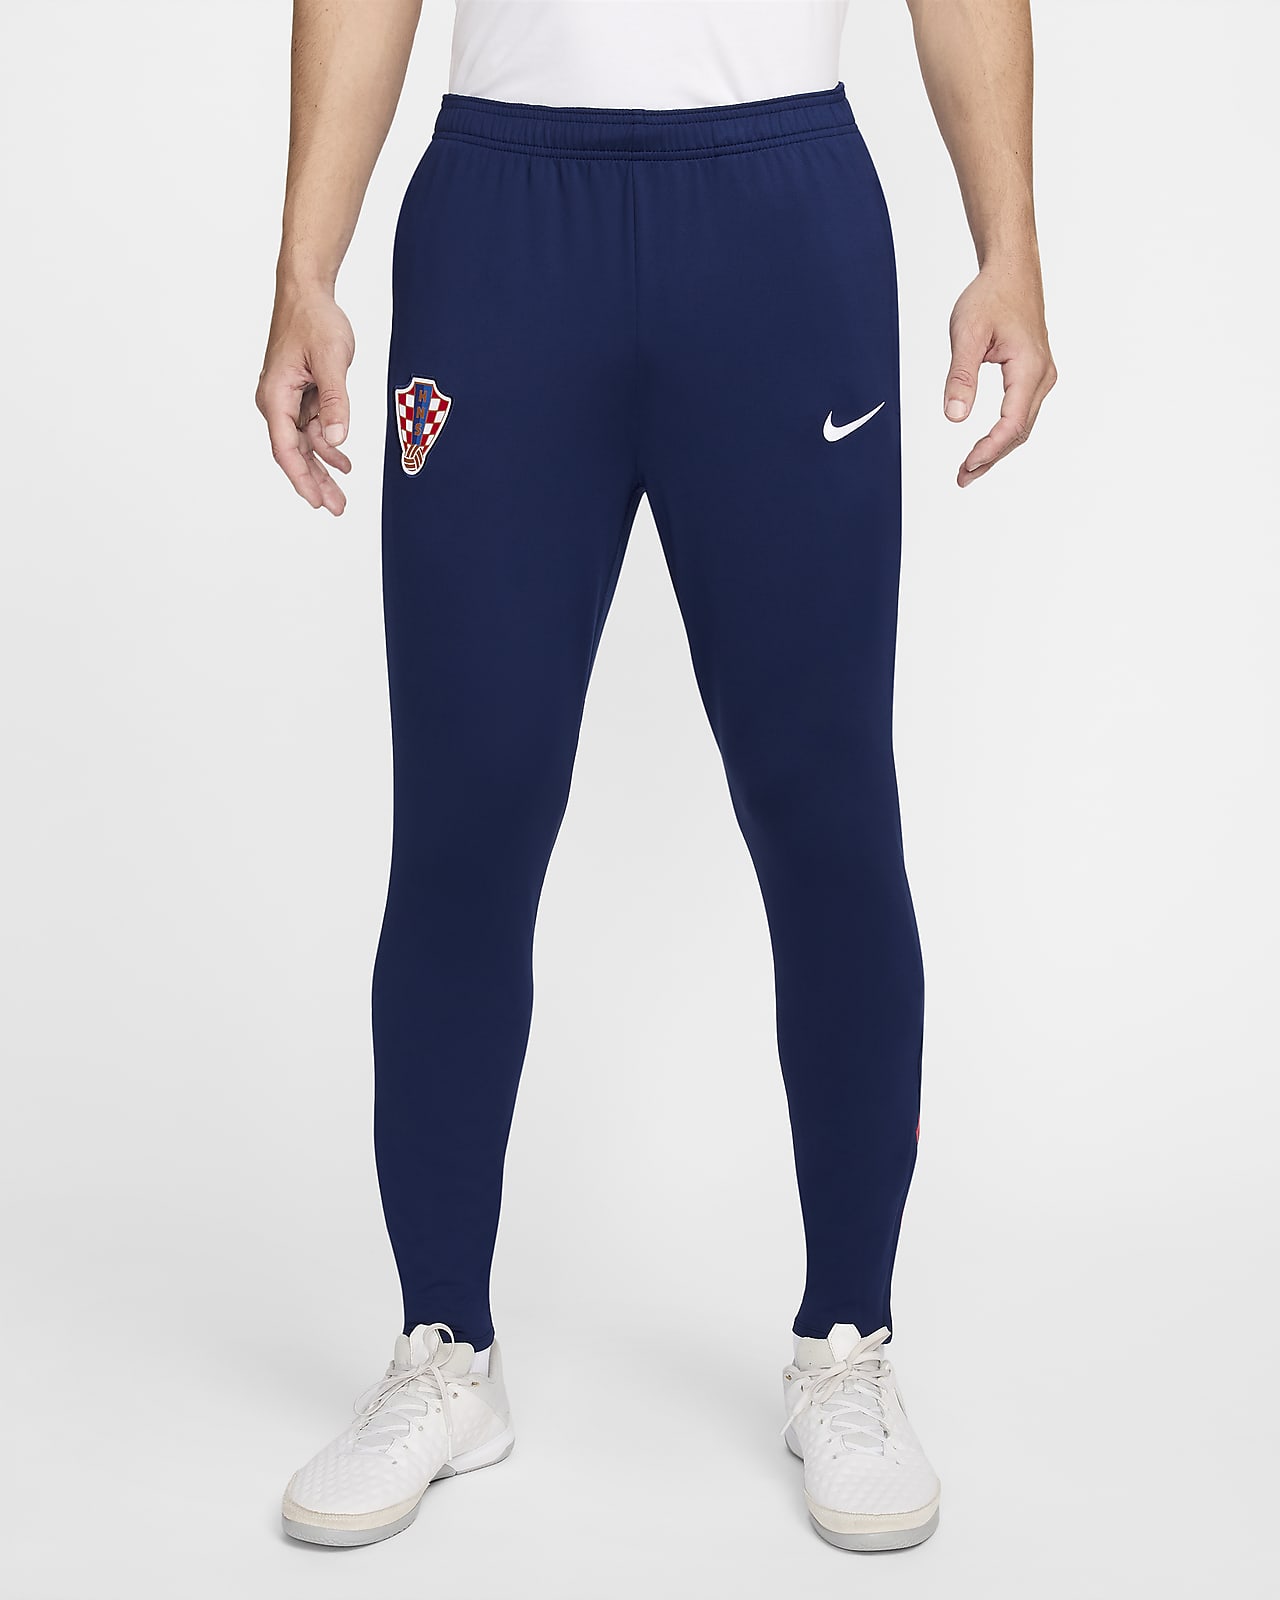 Croacia Strike Nike Dri-Fit Pantalón de fútbol - Hombre